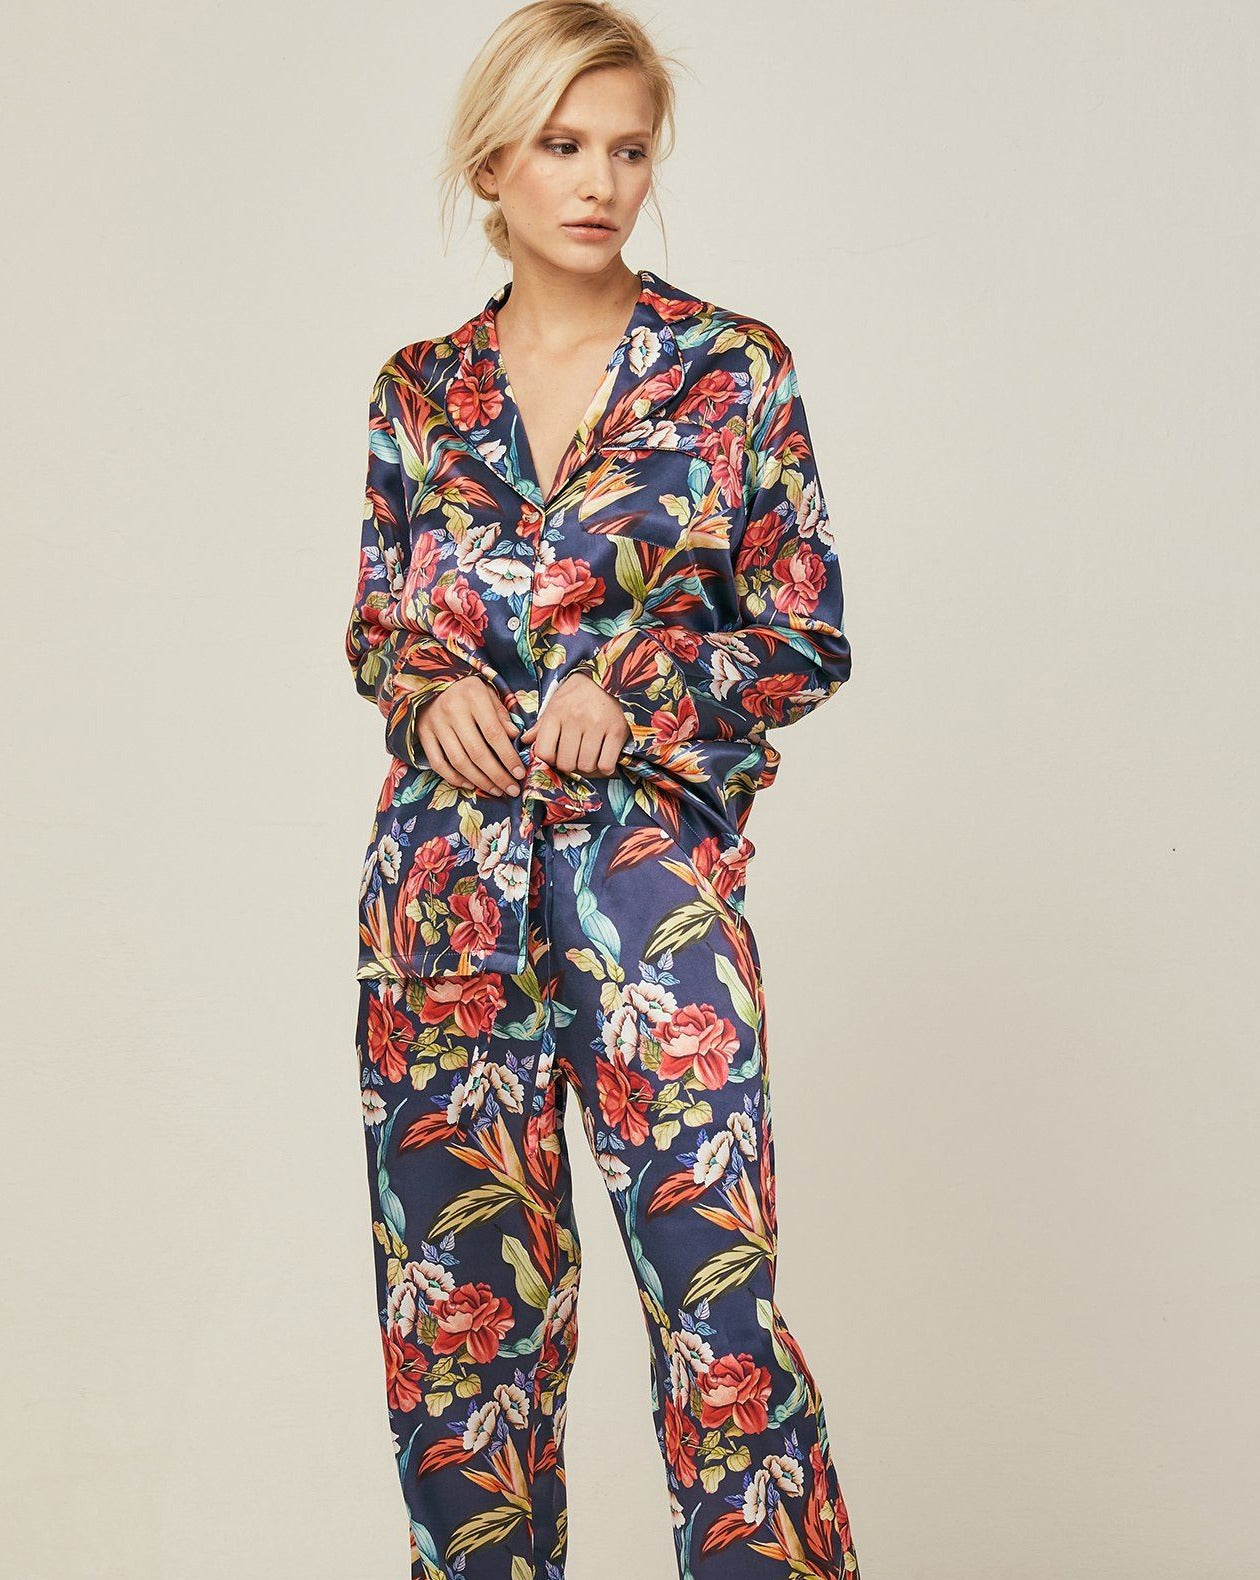 Elisabetha Urban Jungle - Top Loungewear, Pyjama, Seidenpyjama, Schlafanzug | RADICE